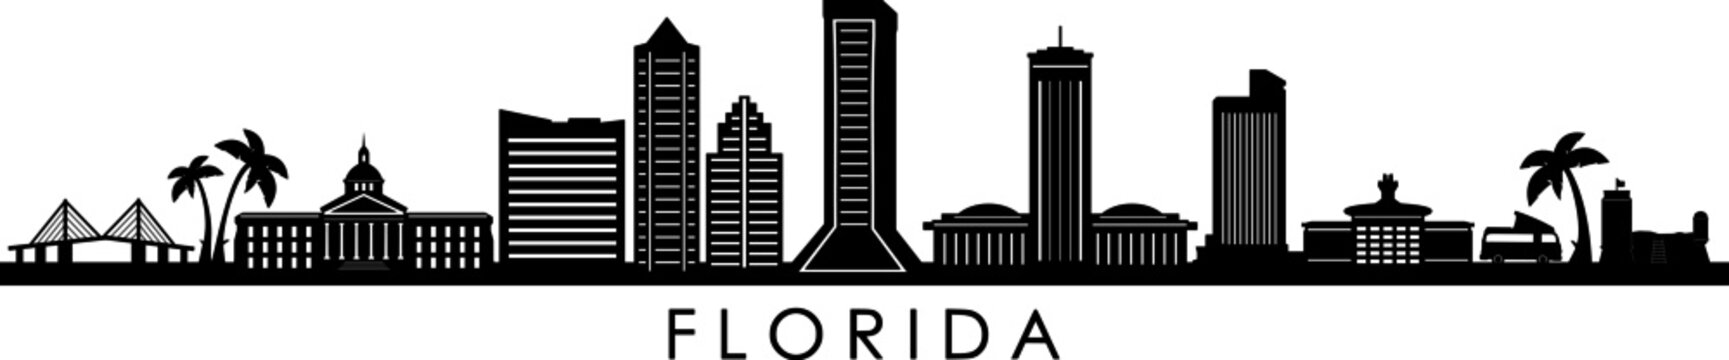 FLORIDA State SKYLINE City Silhouette
